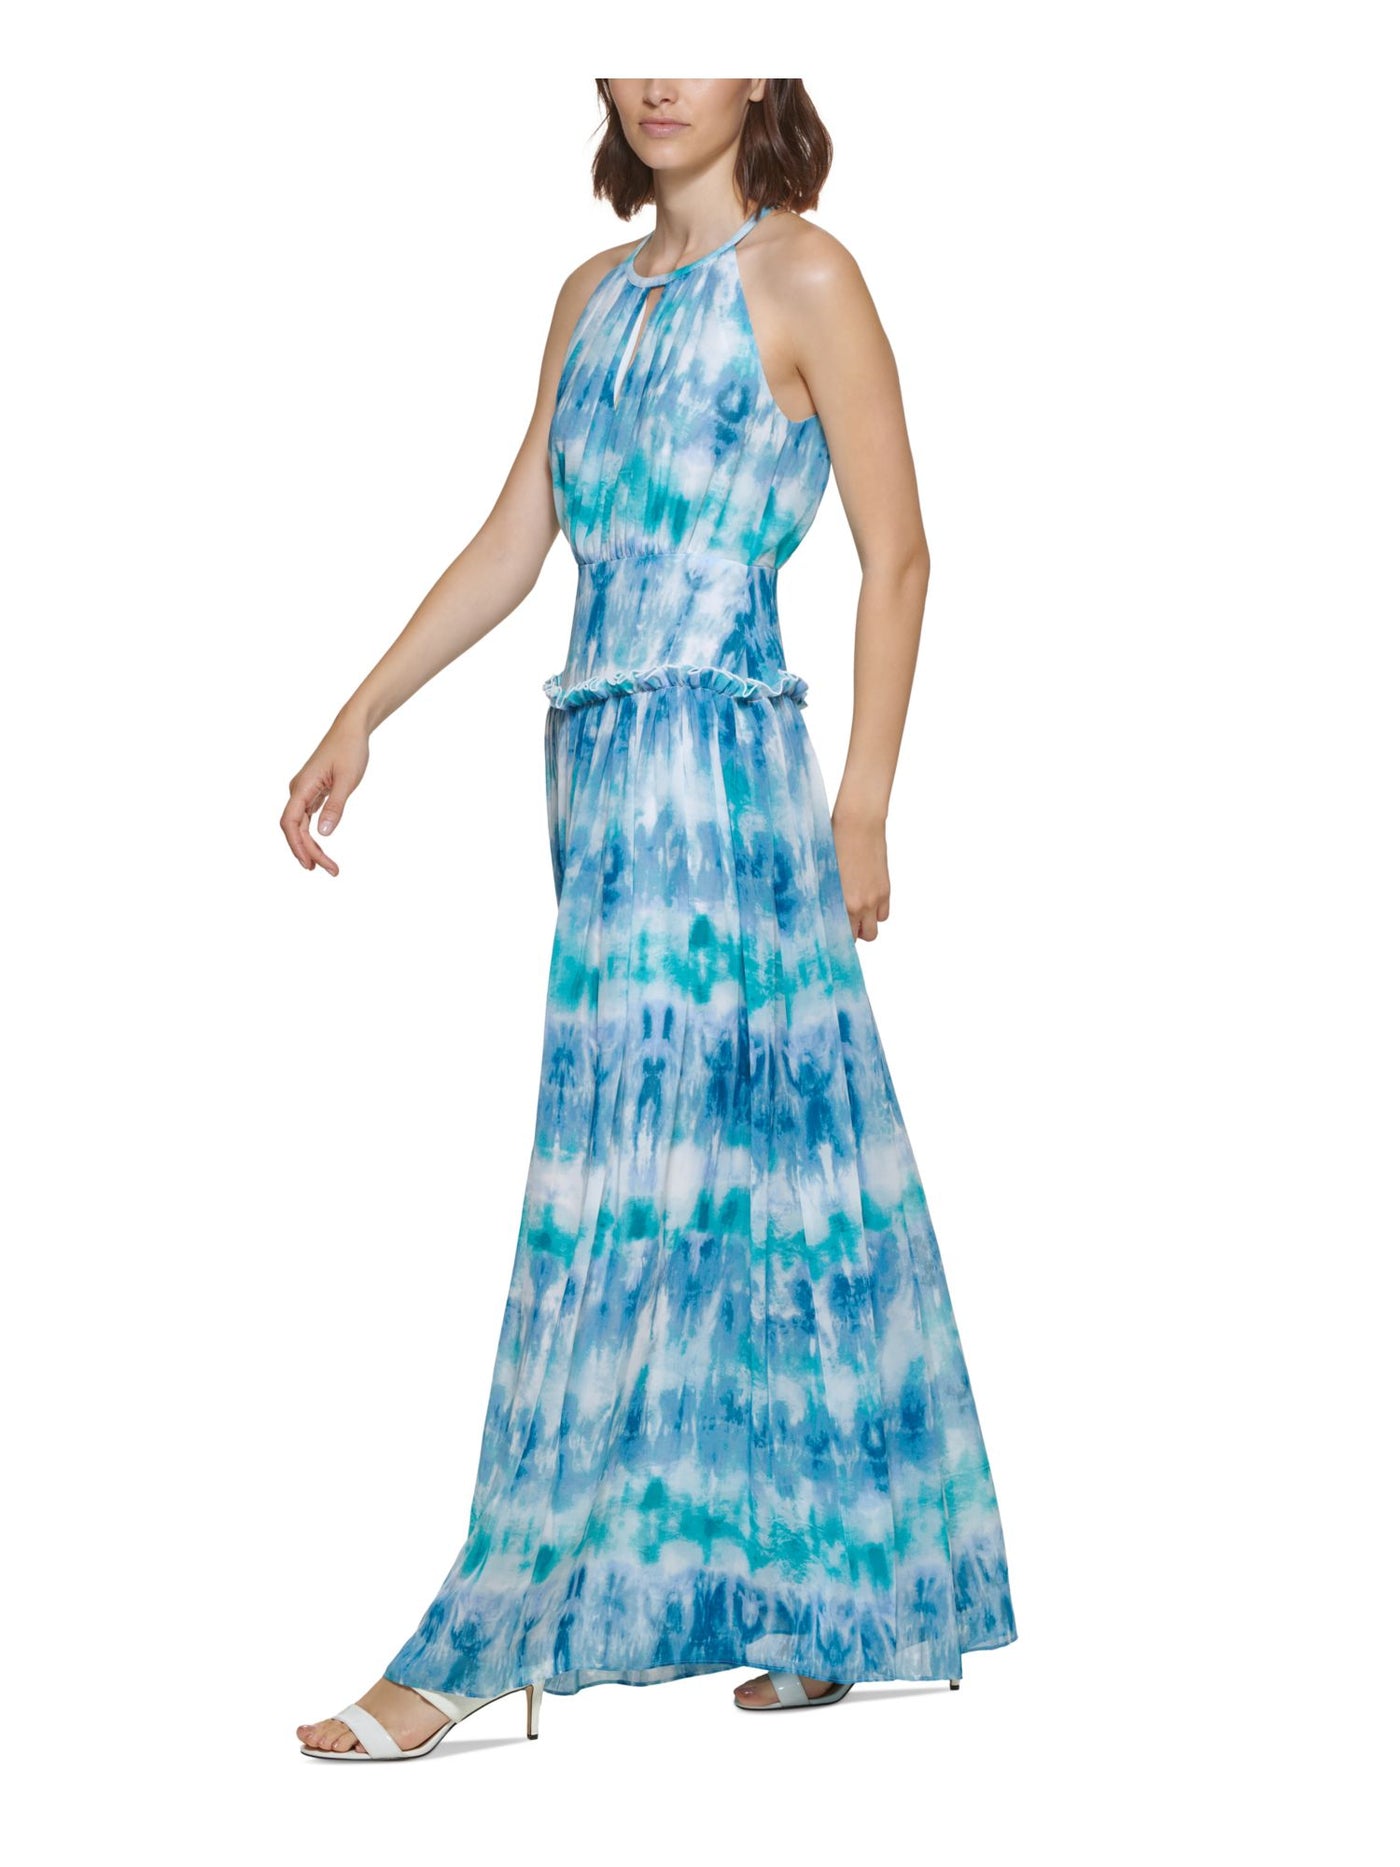 CALVIN KLEIN Womens Blue Zippered Cut Out Ruffle Trim Tie Dye Sleeveless Round Neck Full-Length Formal Gown Dress 4